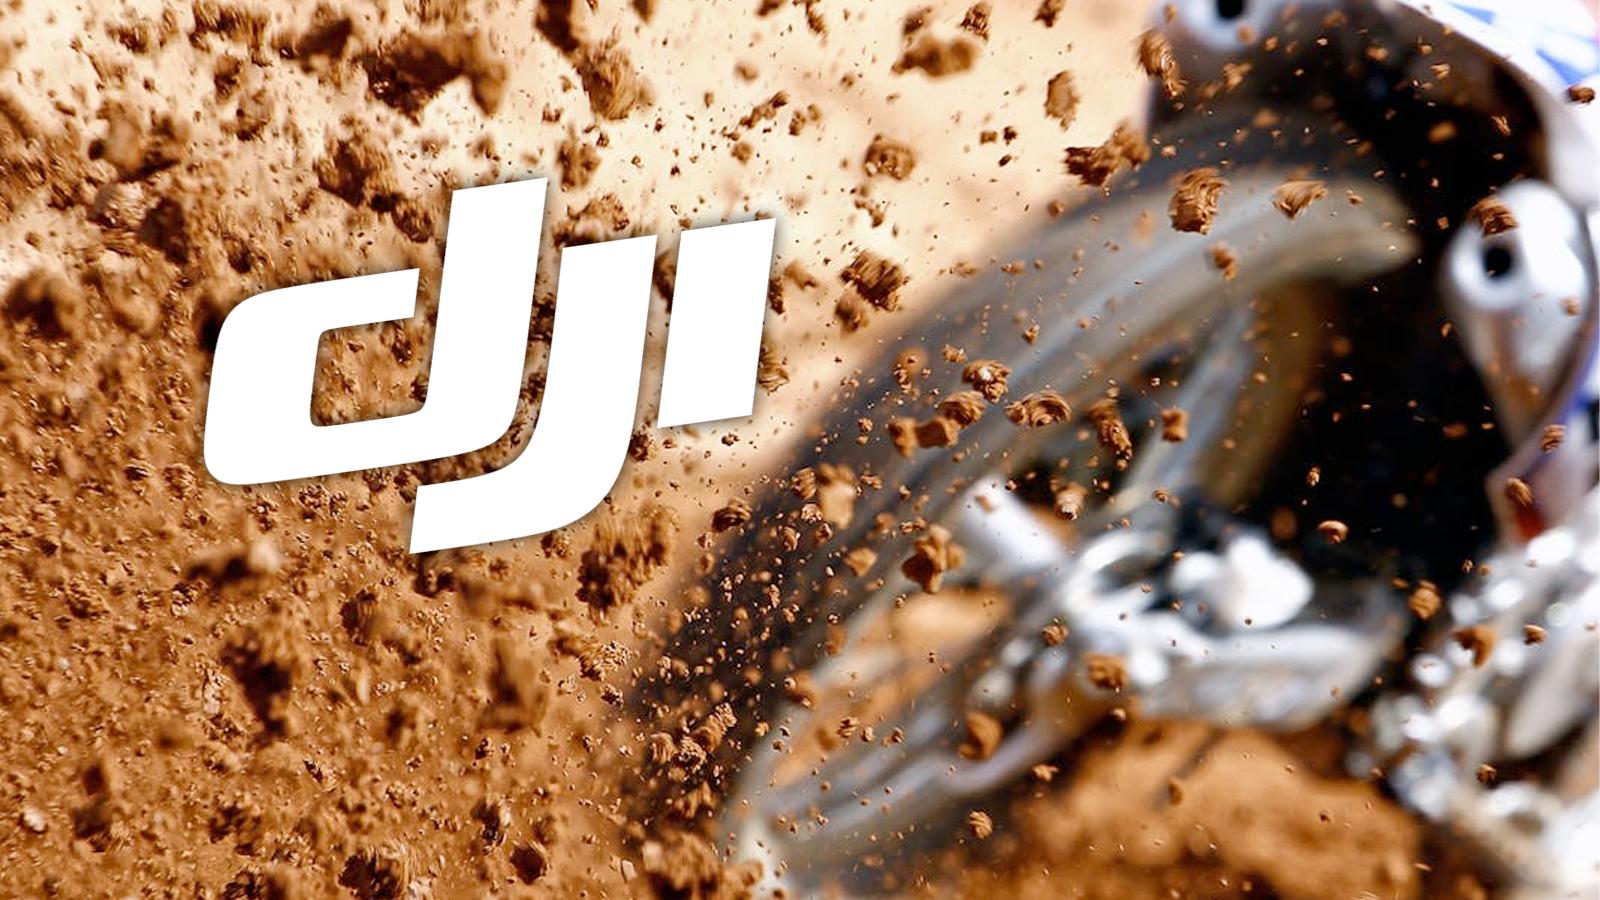 DJI logo next to a dirt bike